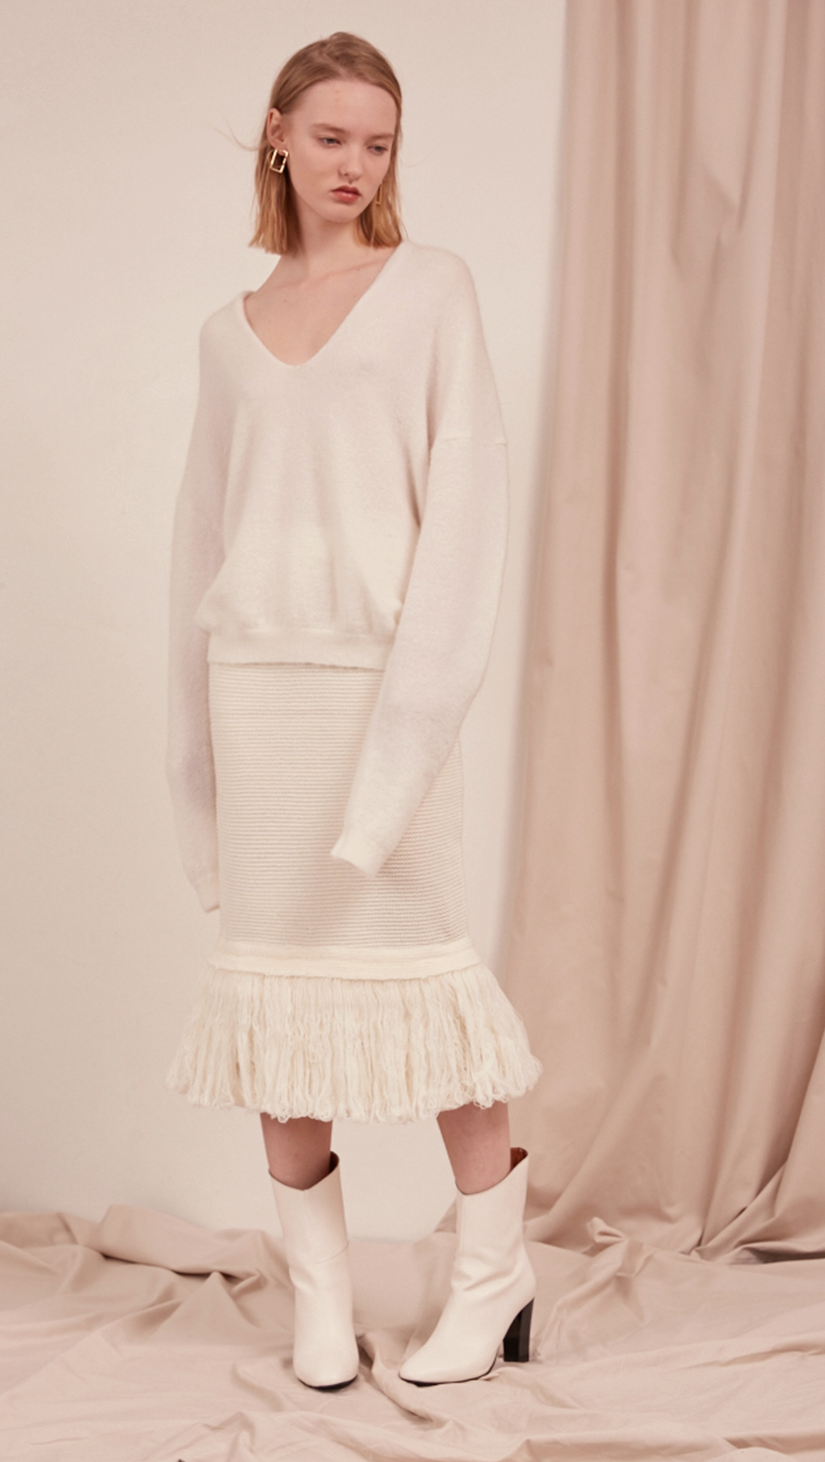 The Losara Skirt in ribbed knit off-white. With gathered elastic waistband, tassels hem, deep v back slits.